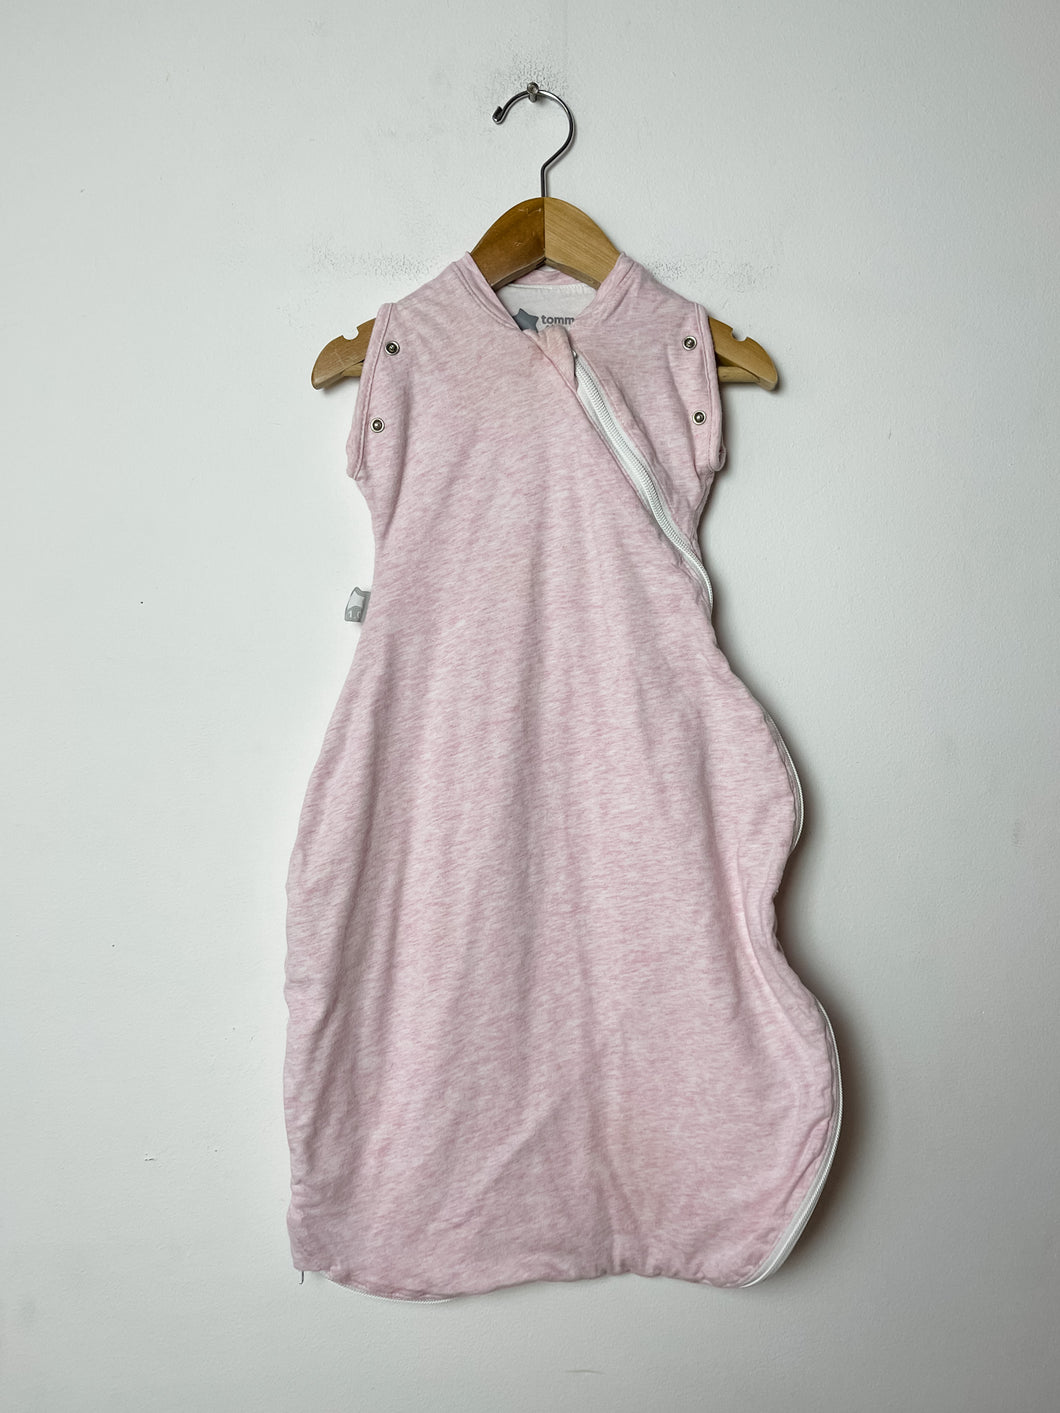 Pink Tommee Tippee Sleepsack Size 3-9 Months